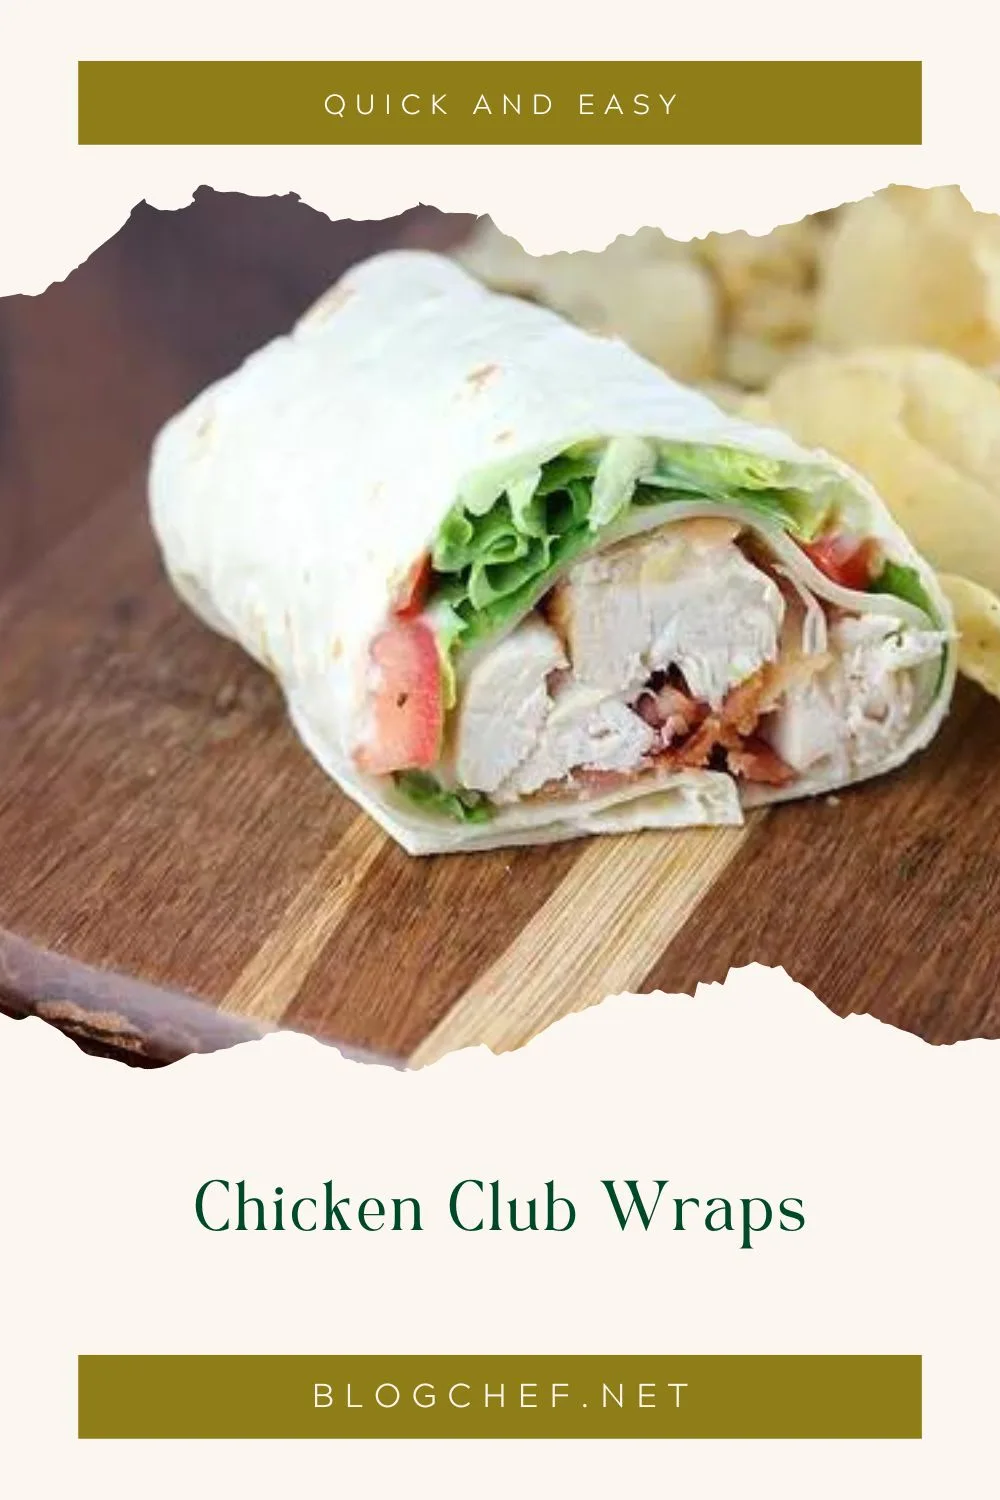 Chicken club wrap recipe.